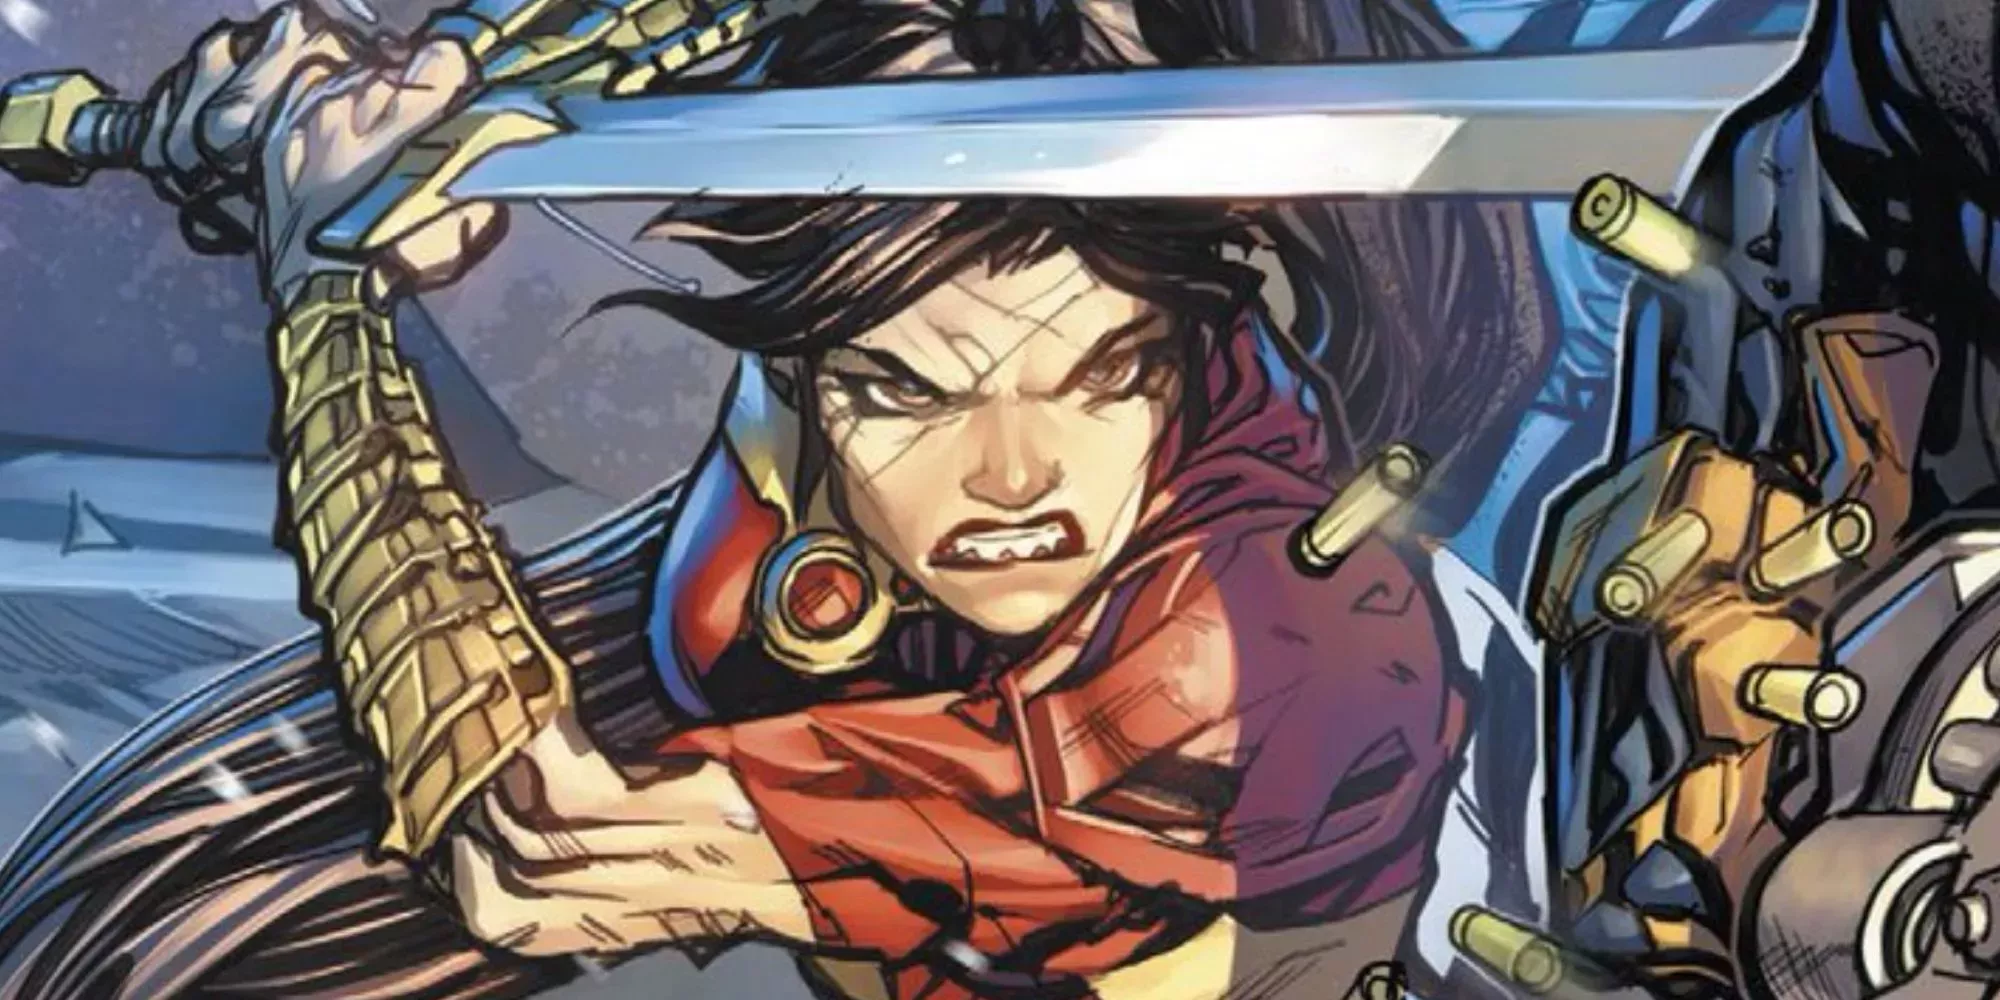 Lady Shiva fights Batman in DC Comics